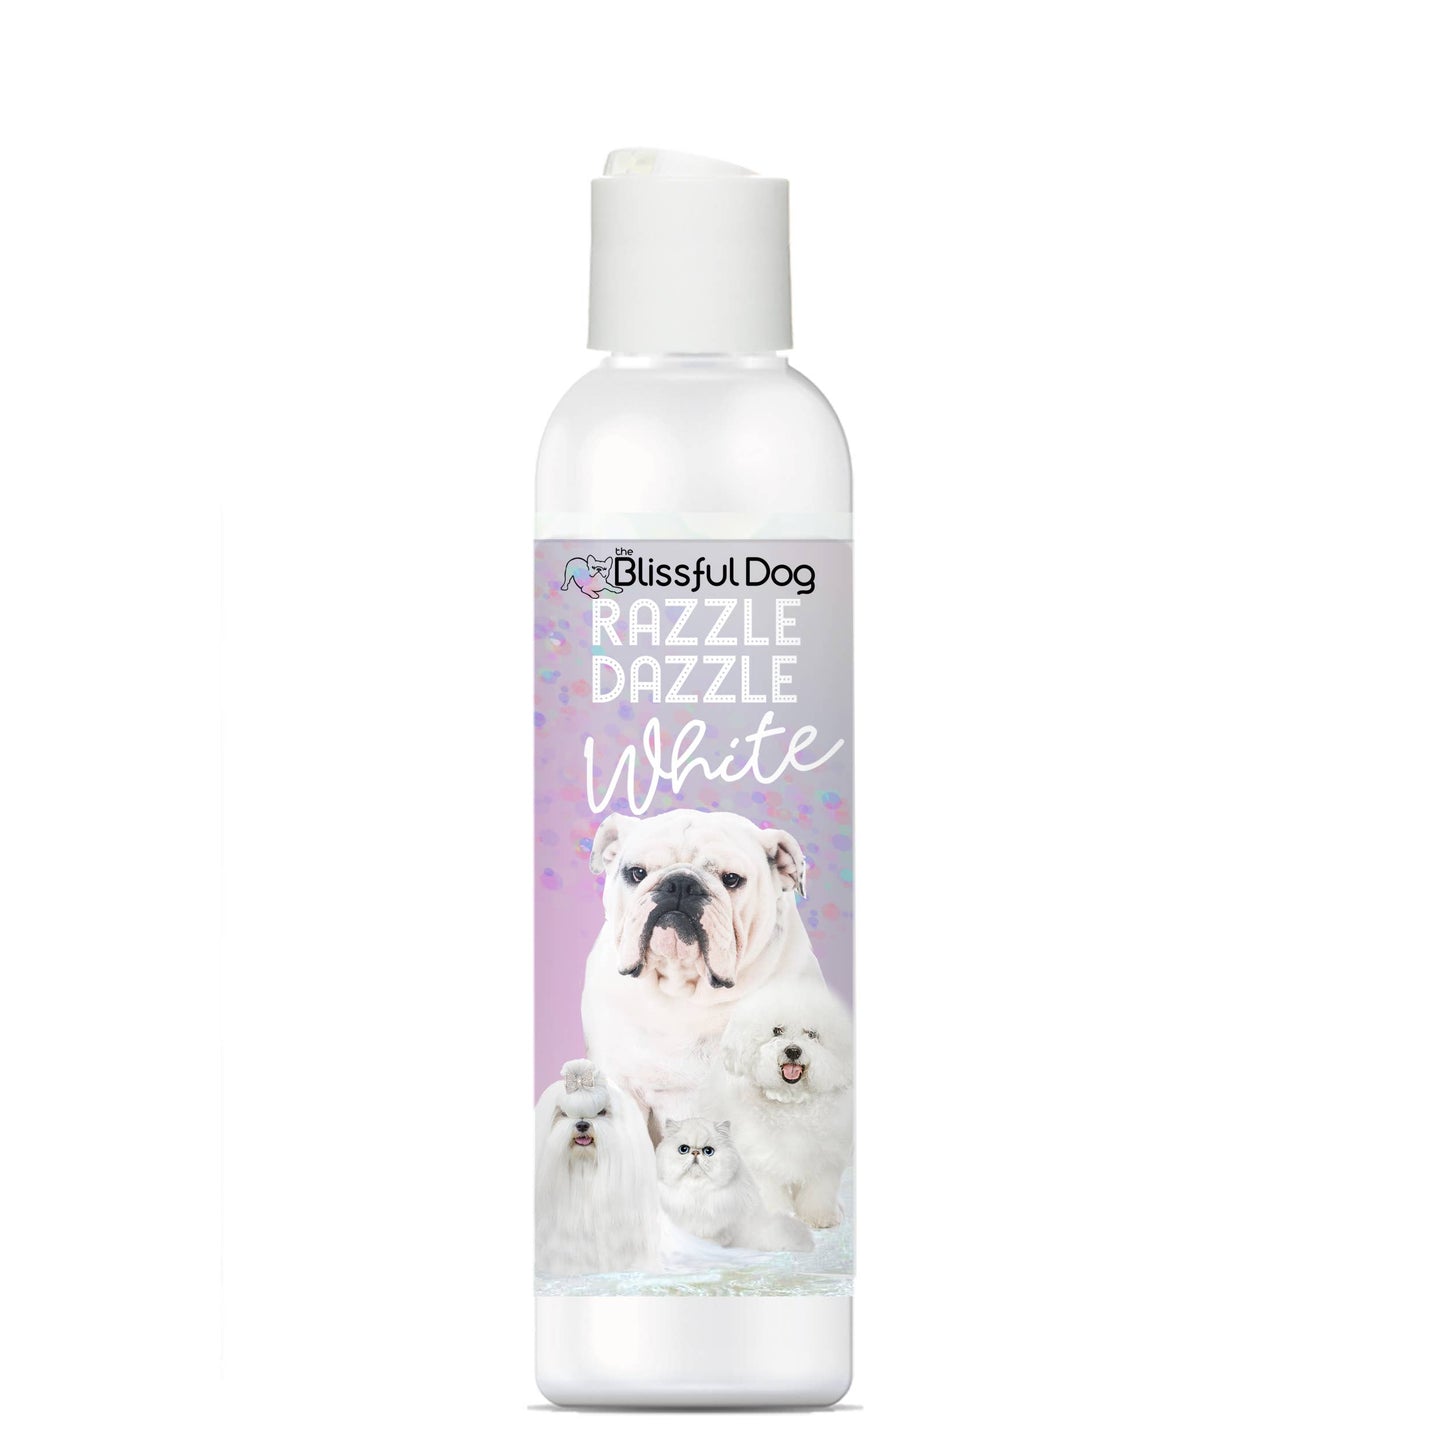 Razzle Dazzle White Pet Shampoo for Next Level White